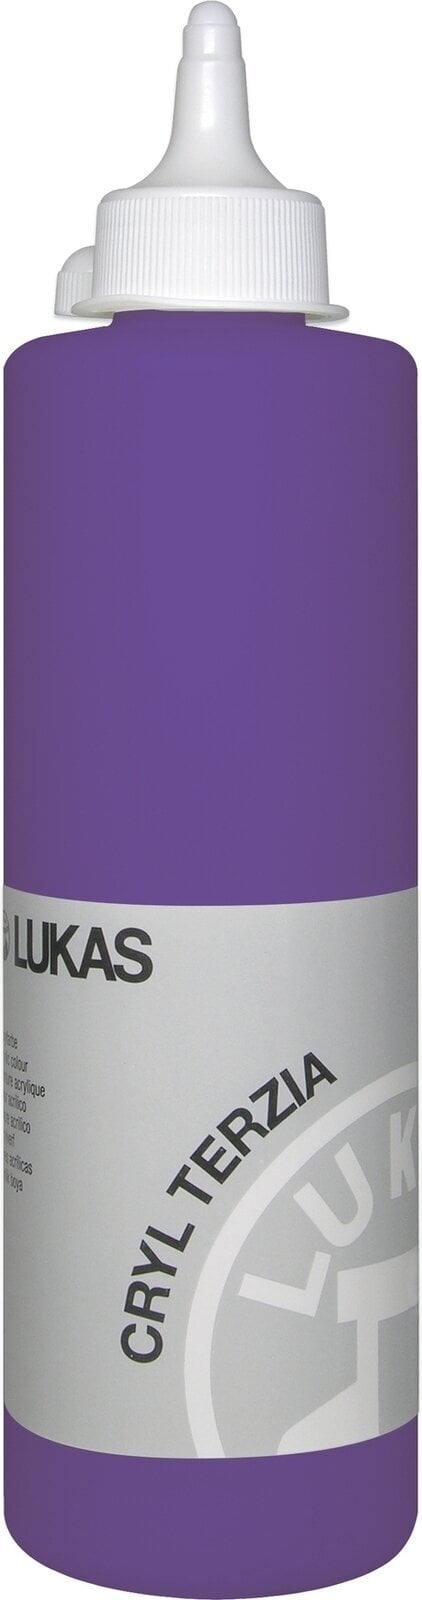 Acrylverf Lukas Cryl Terzia Acrylverf 500 ml Cobalt Violet Deep Hue